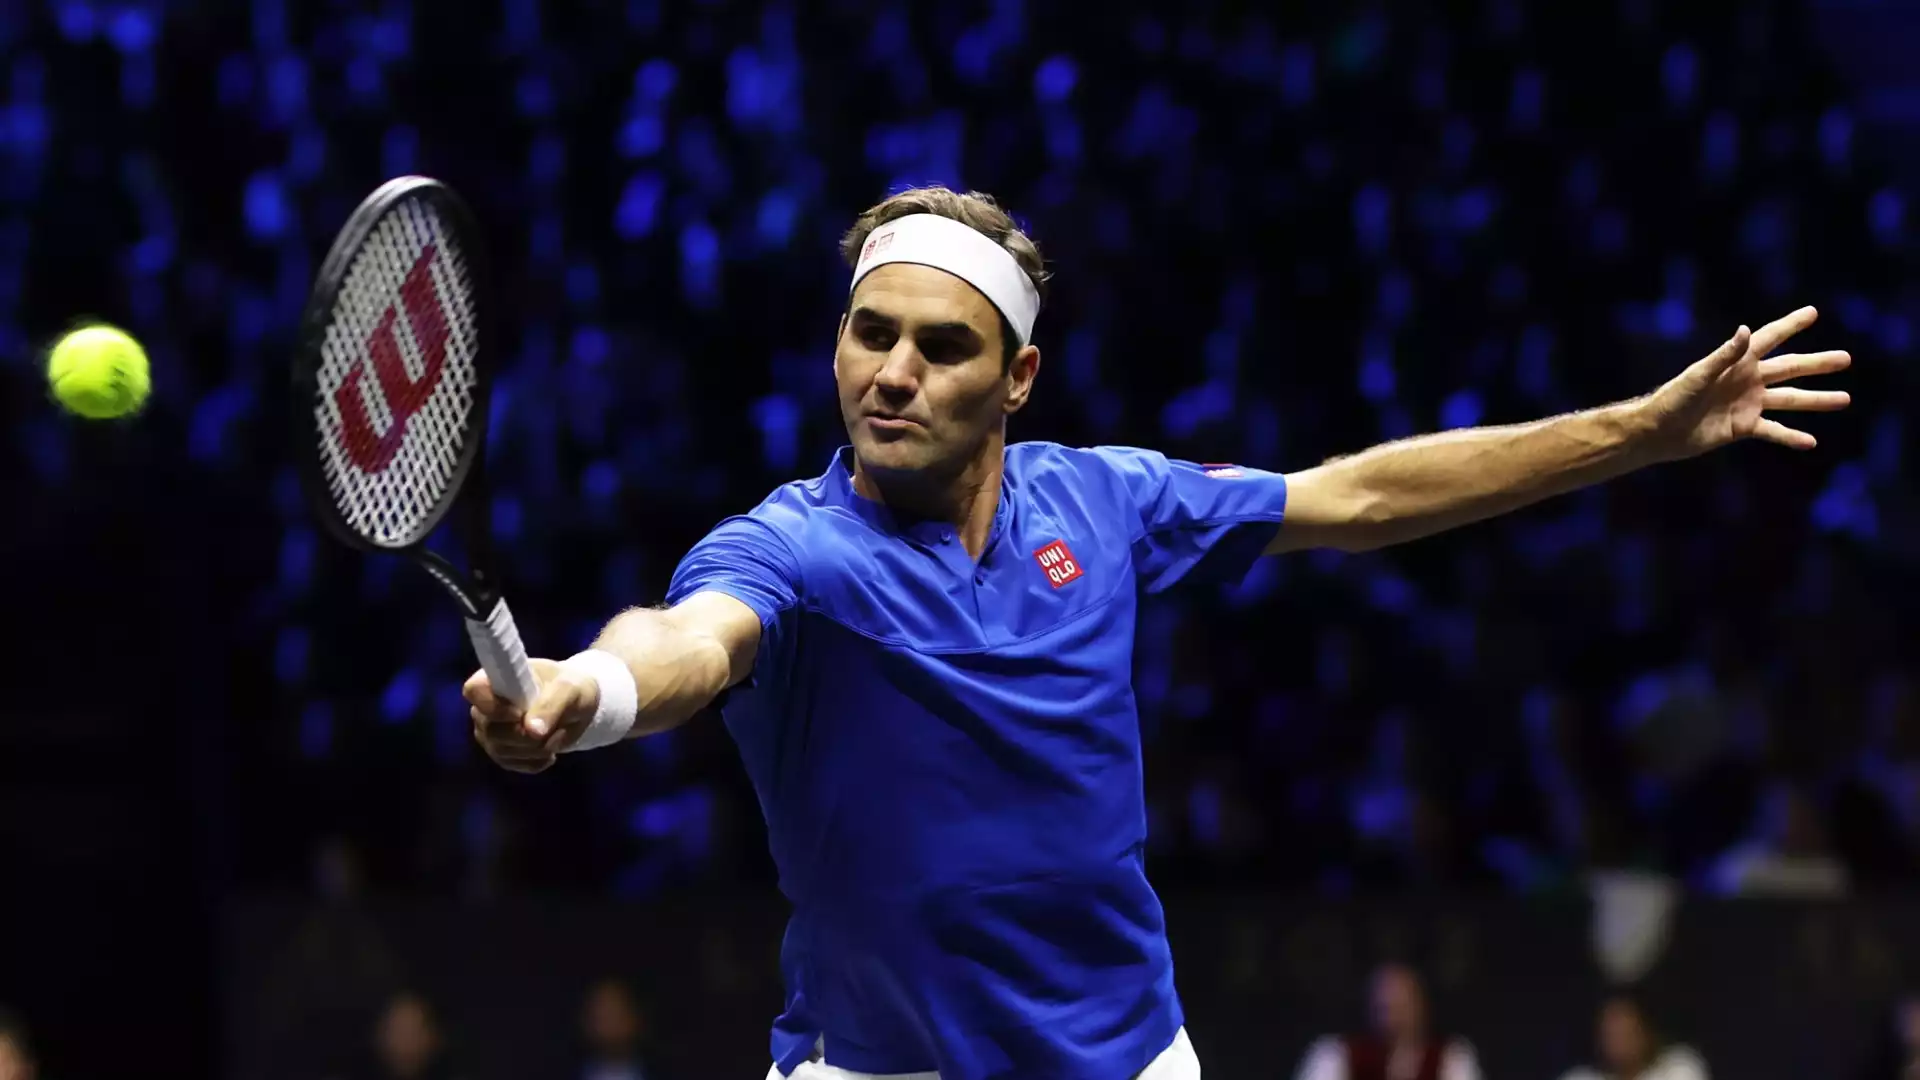 8 Roger Federer (Tennis, Svizzera): totale guadagni stimati 85.5 milioni di dollari